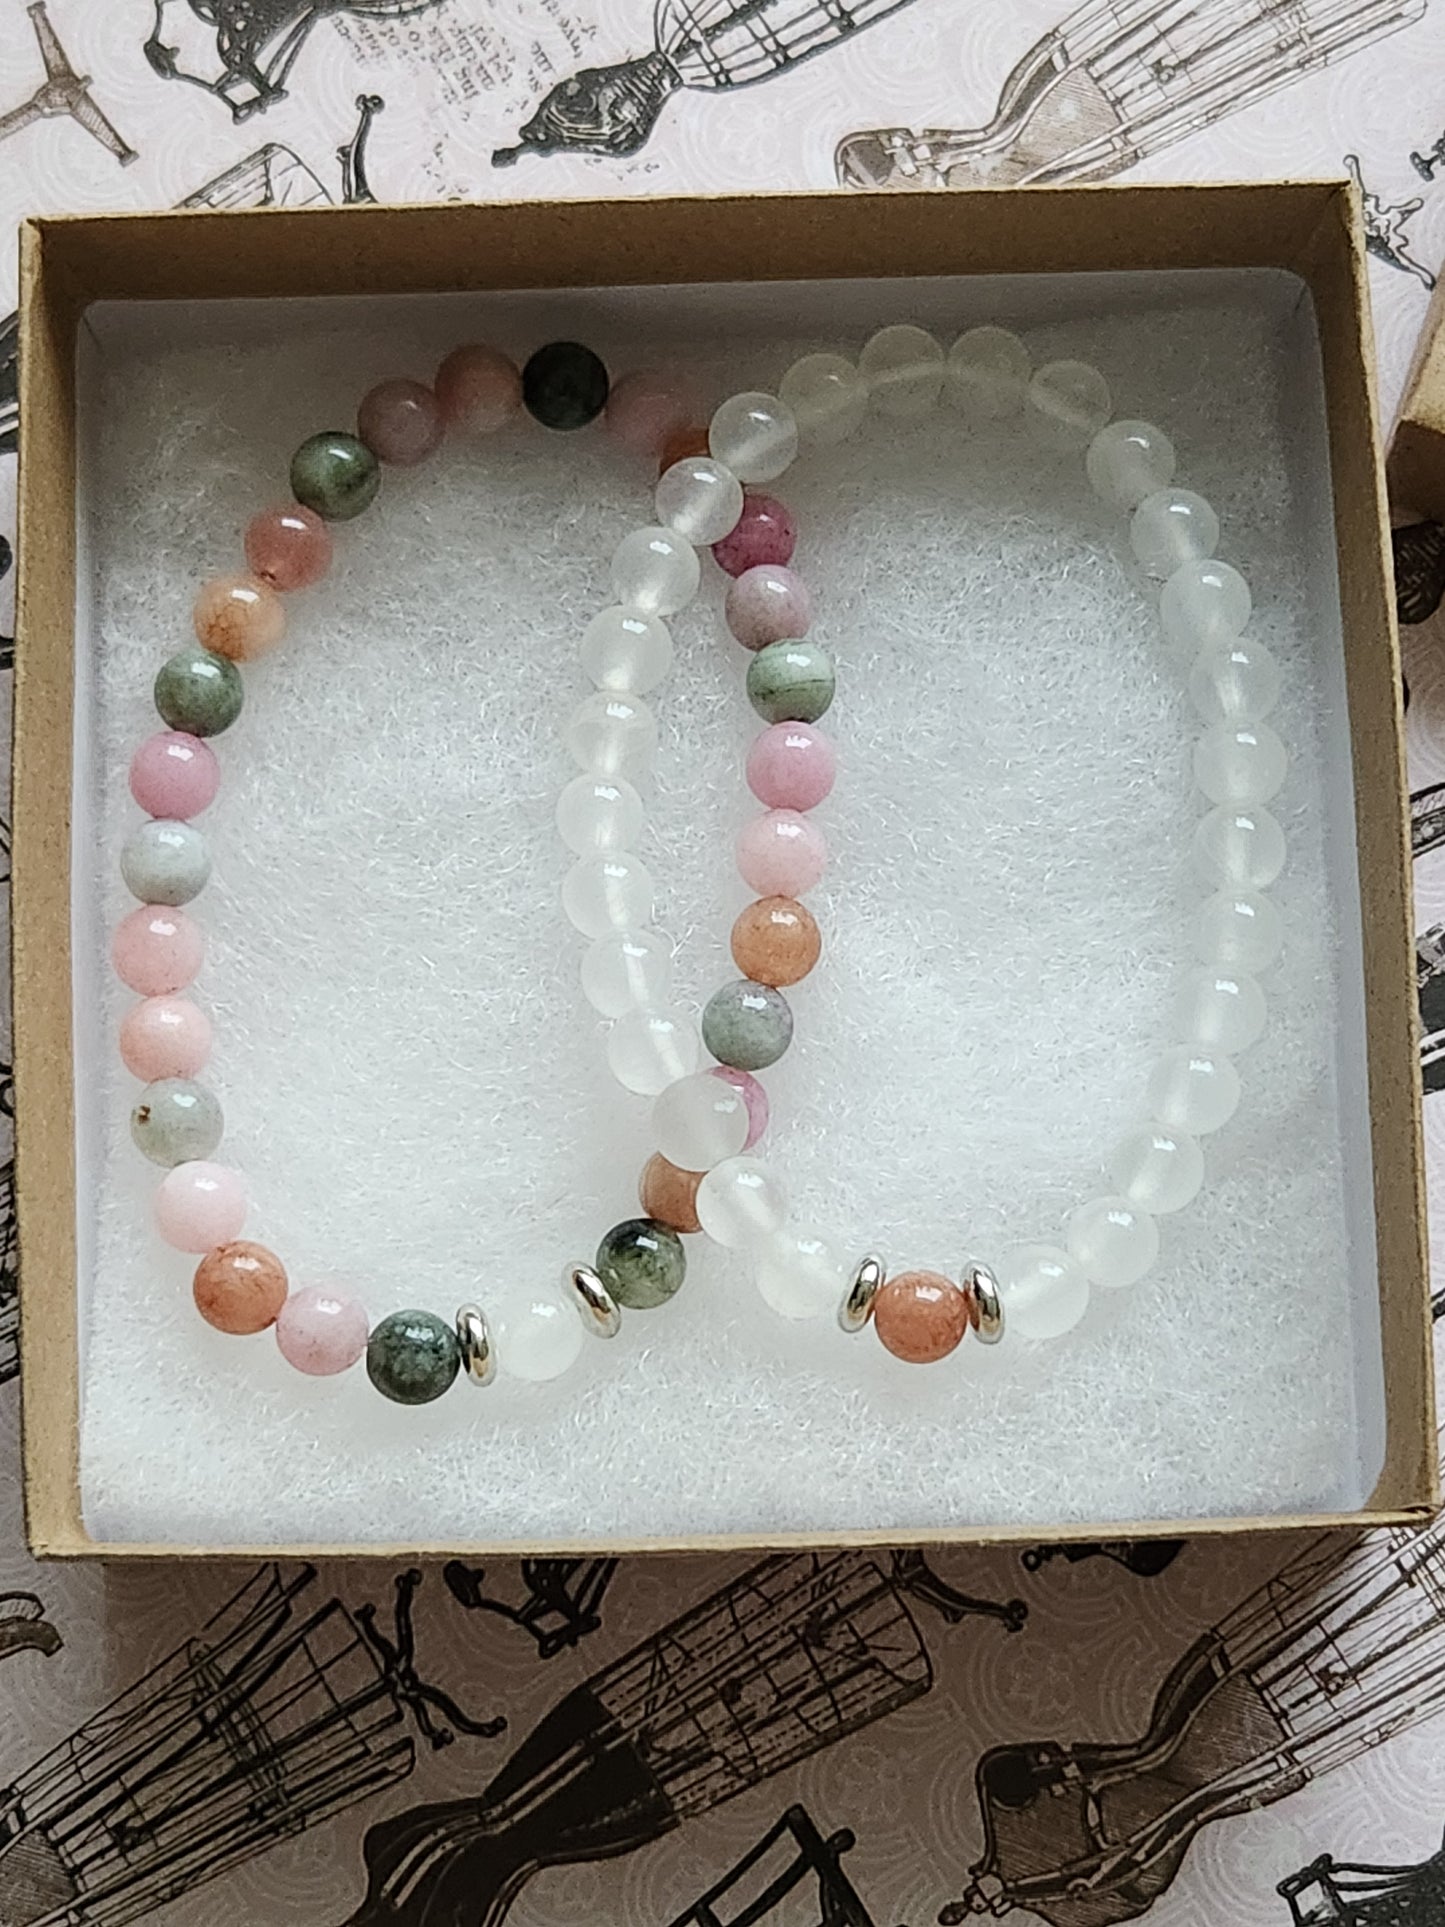 Rainbow Stone and Selenite Stone Bracelet Set - Set of 2 - compassion - femininity - peace - harmony - sleep - healing